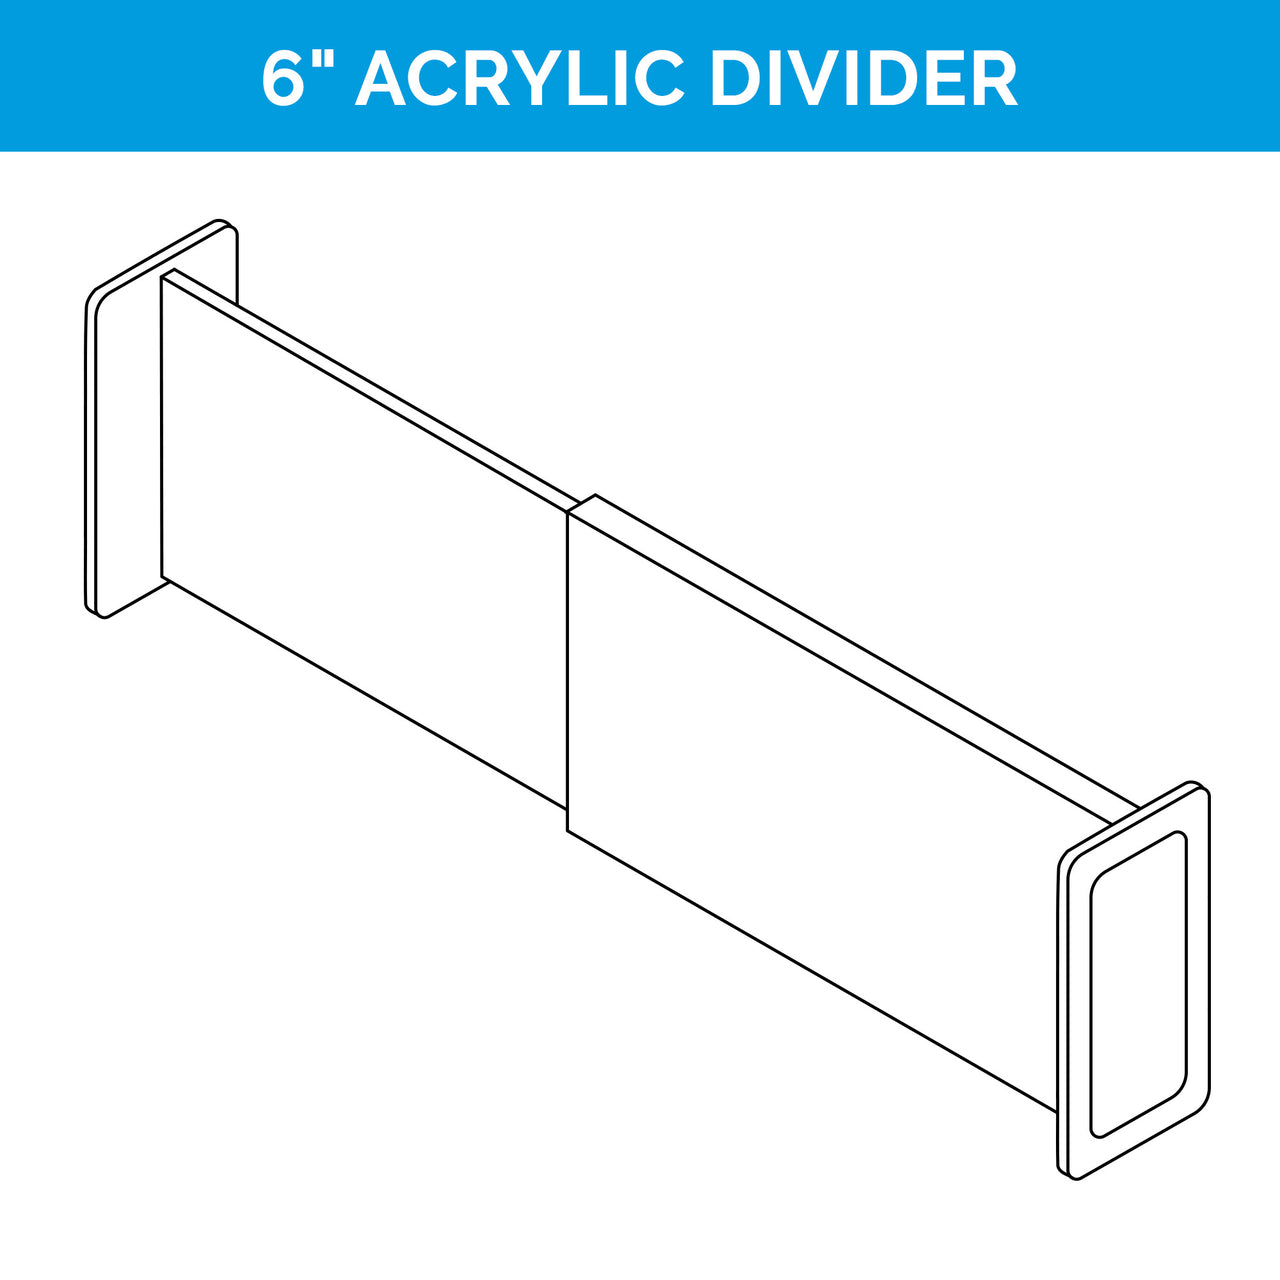 6" acrylic divider